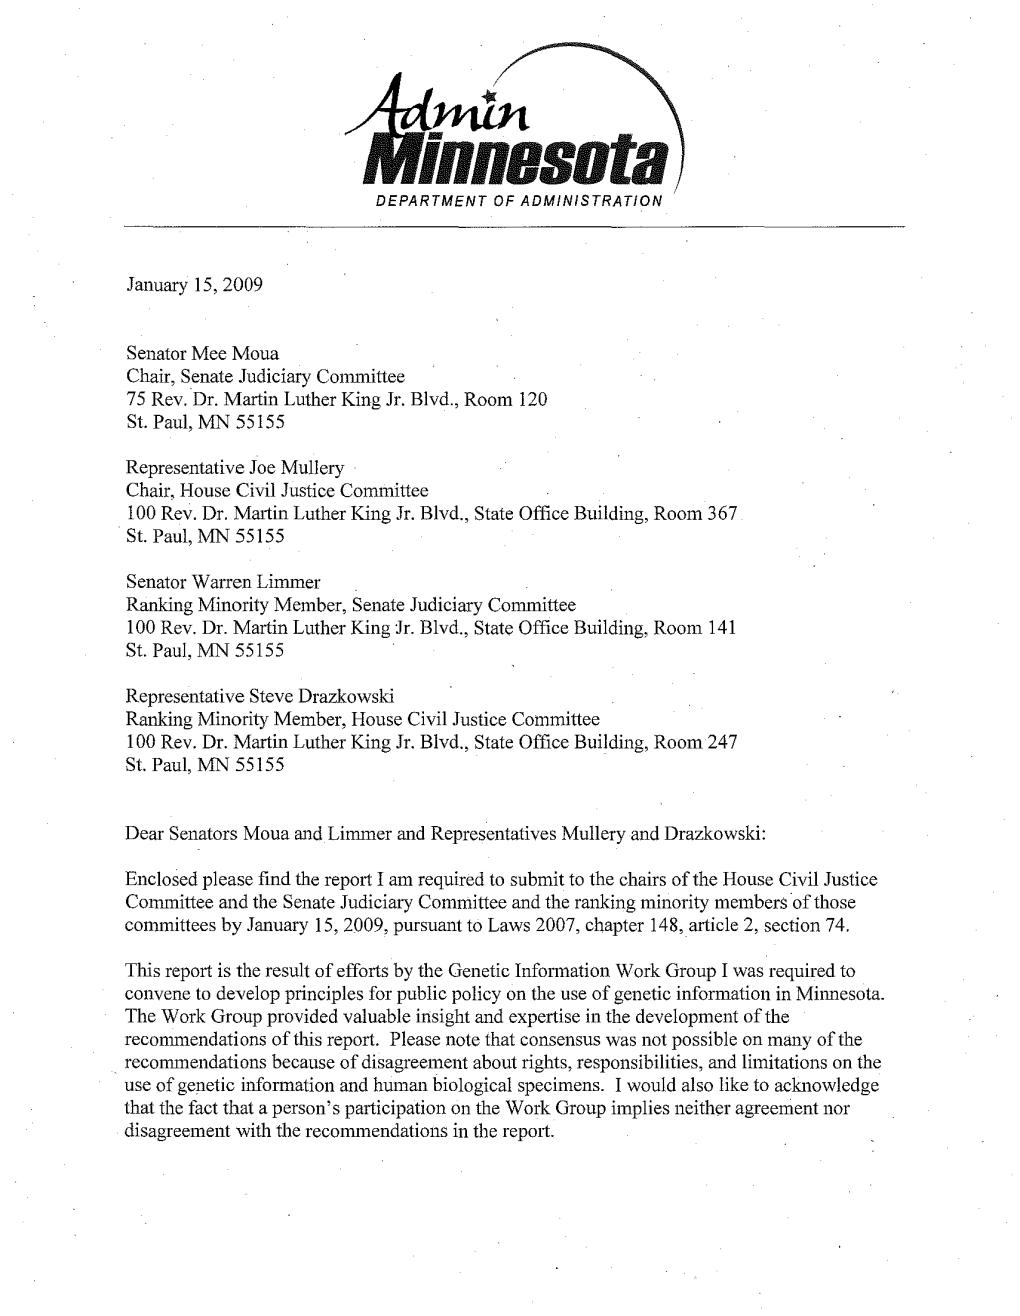 2009 Report to the Legislature on Genetic Information in Minnesota